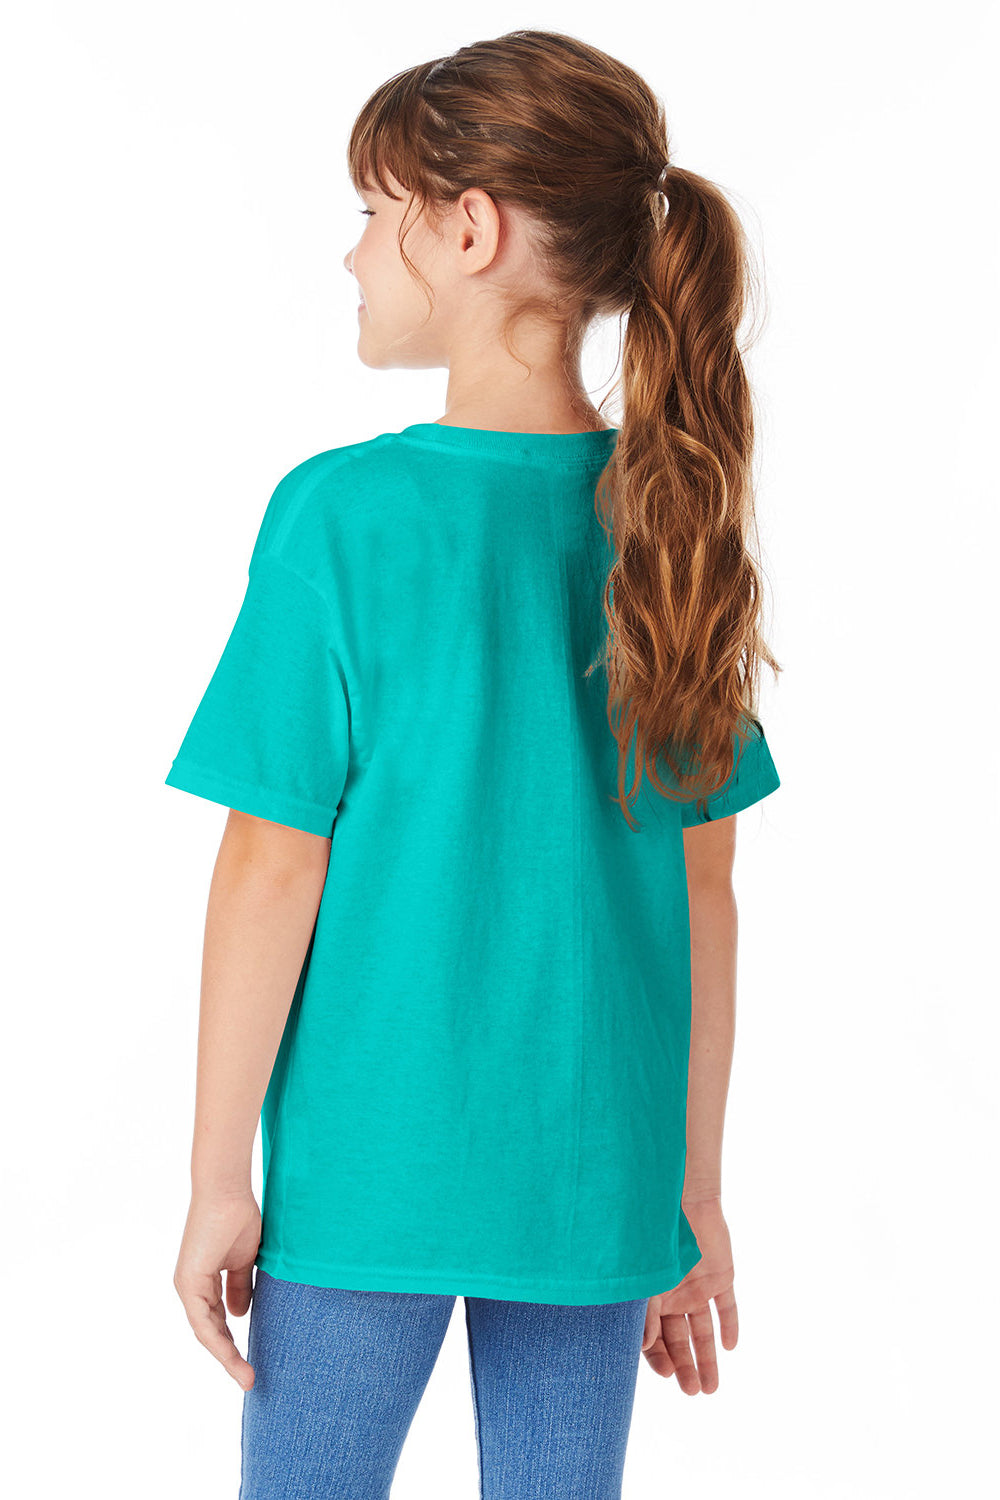 Hanes 5480 Youth ComfortSoft Short Sleeve Crewneck T-Shirt Athletic Teal Green Back